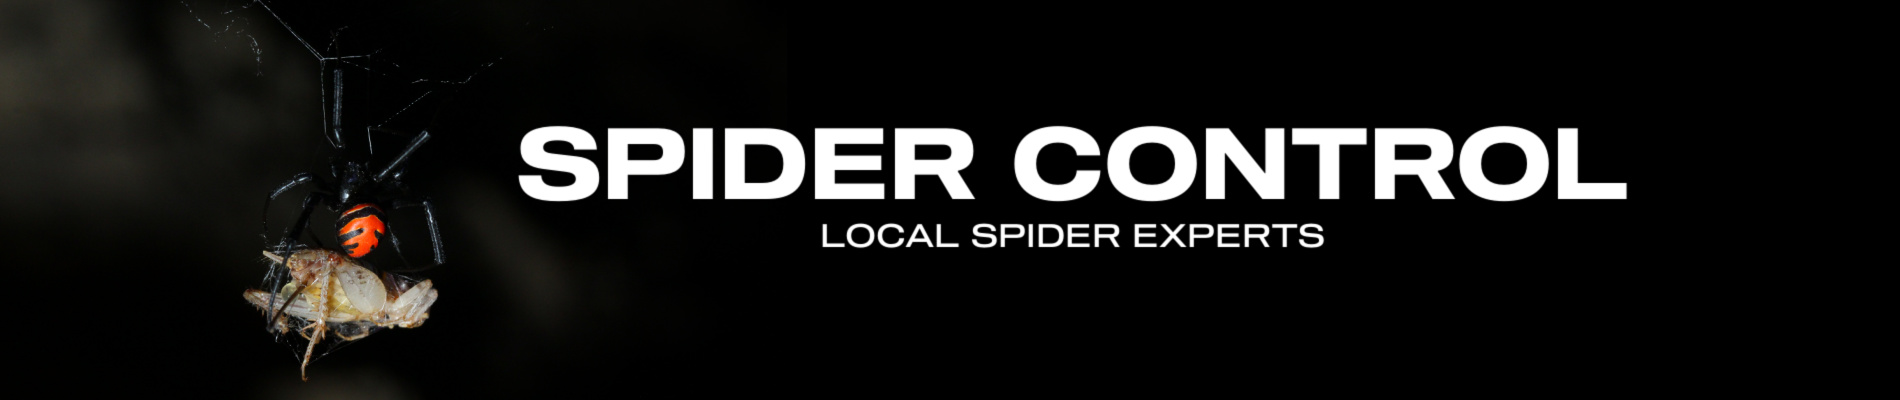 Spider Control Service